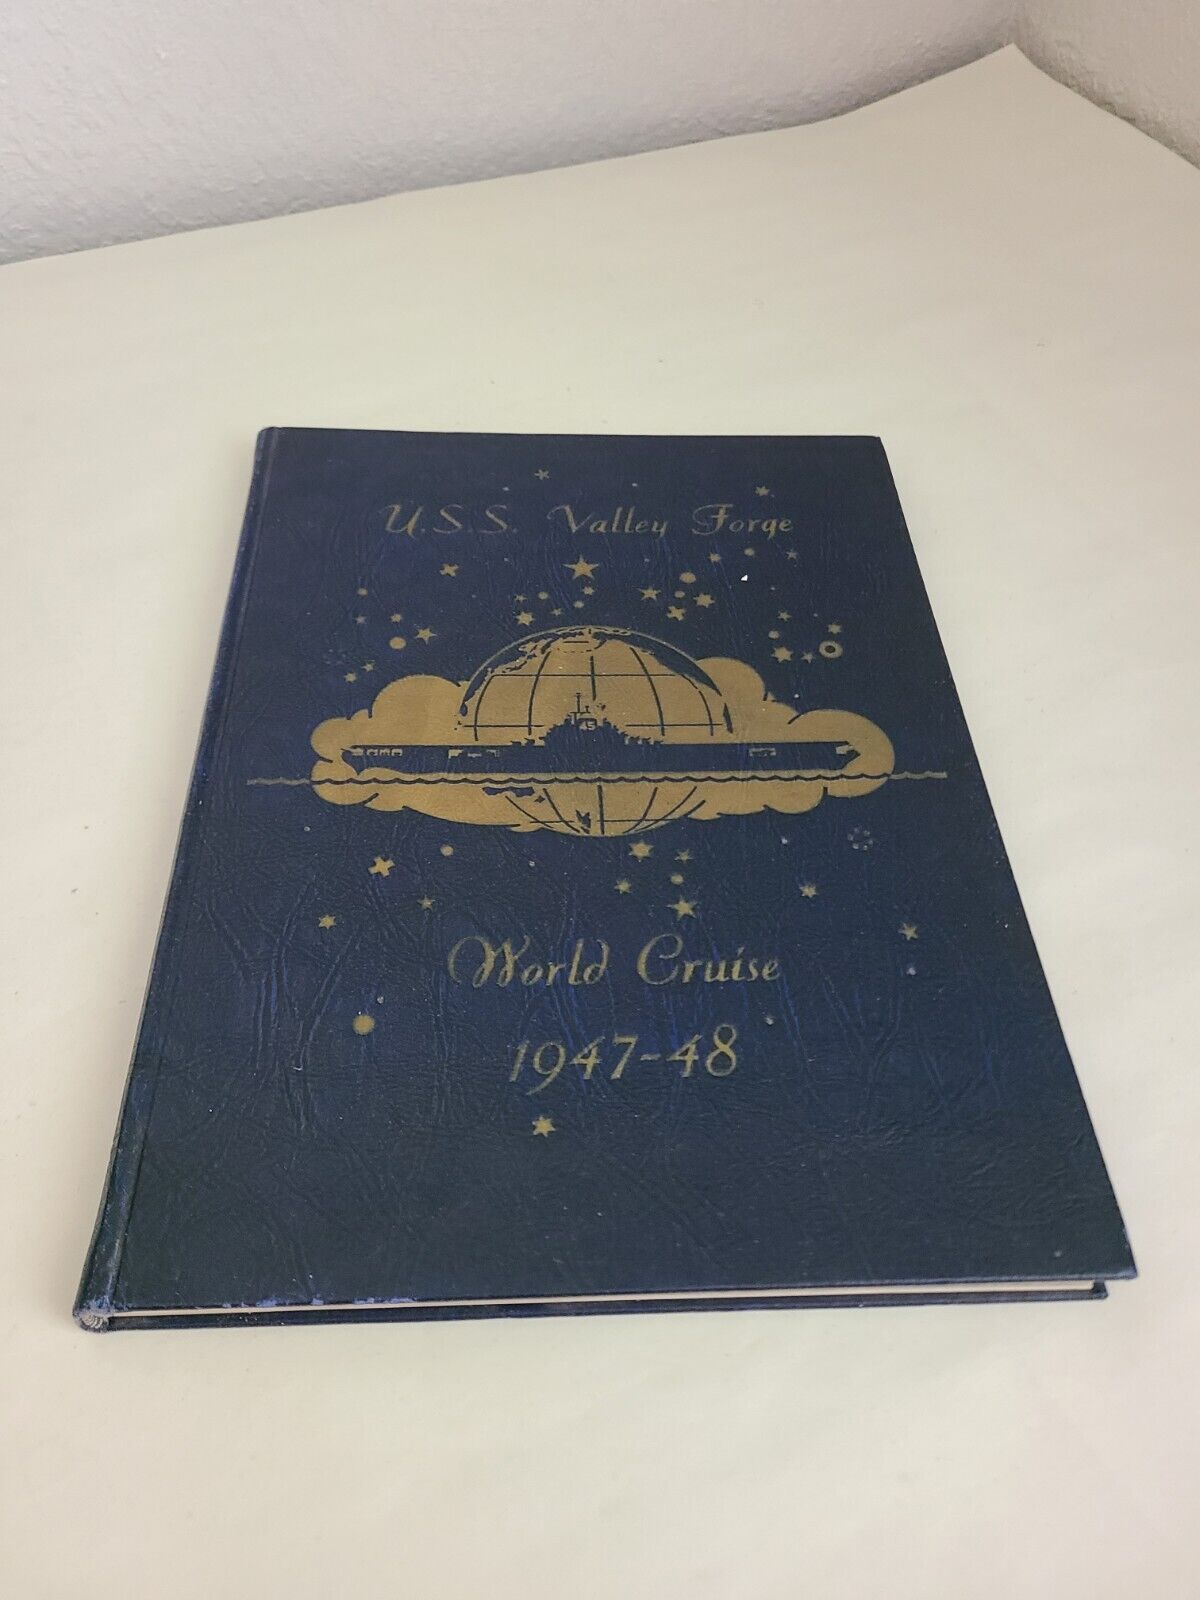 US Navy USS Valley Forge CV-45 Cruise Maiden Deployment 1947-1948 Cruise Book